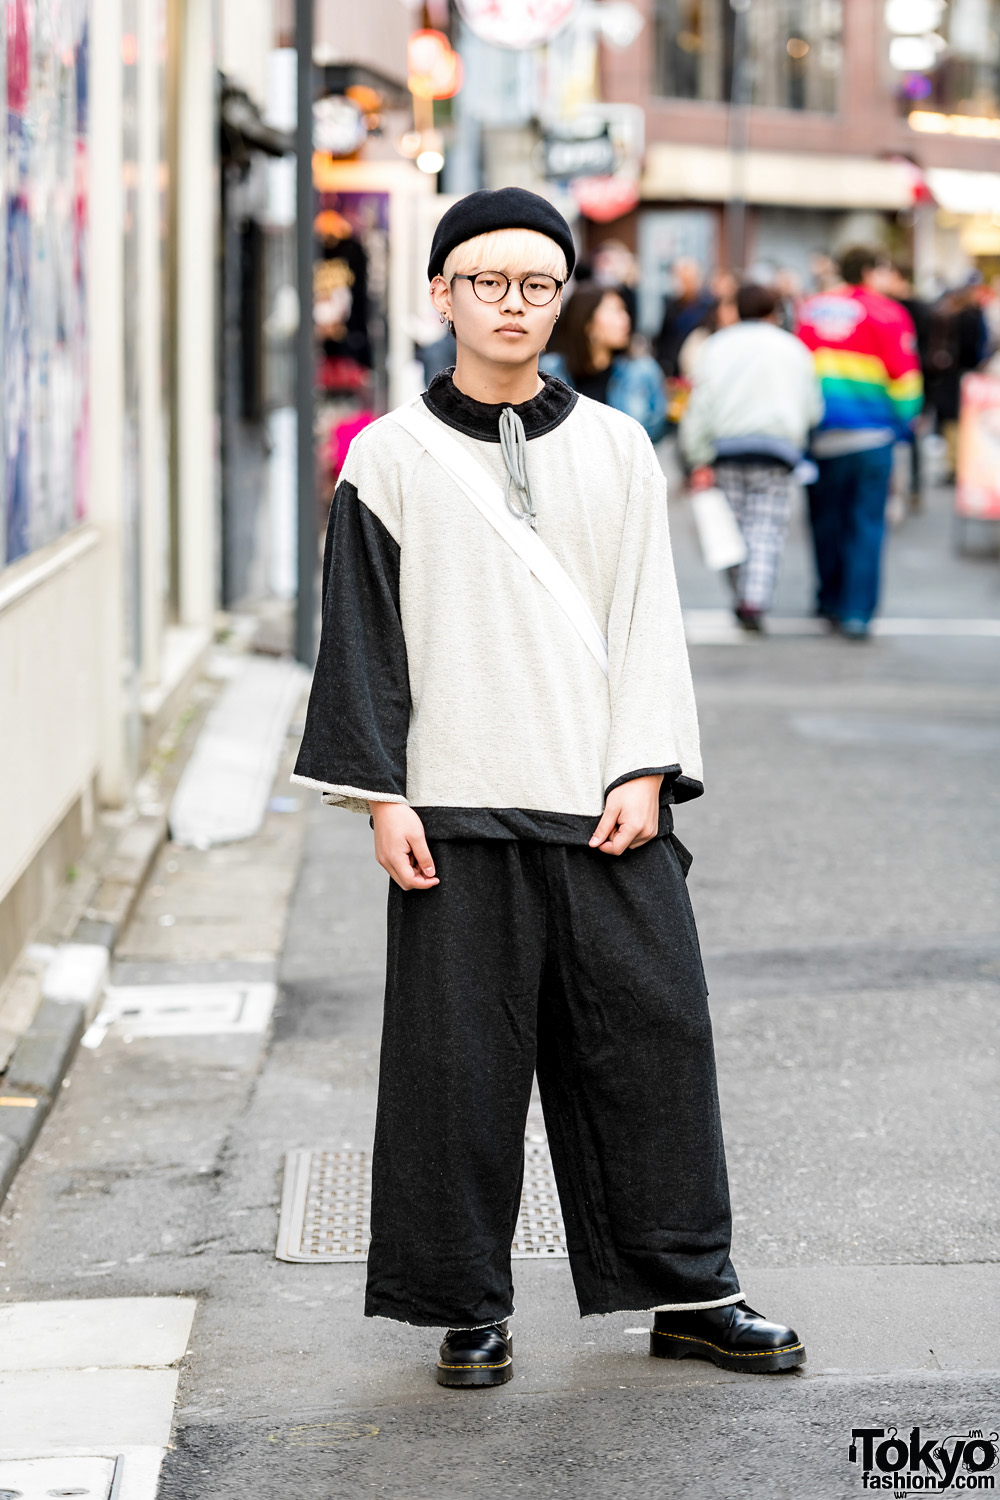 Japanese Monochrome Street Style w/ Amatunal Outfit, Dr. Martens Boots & Kiramisa Sling Bag